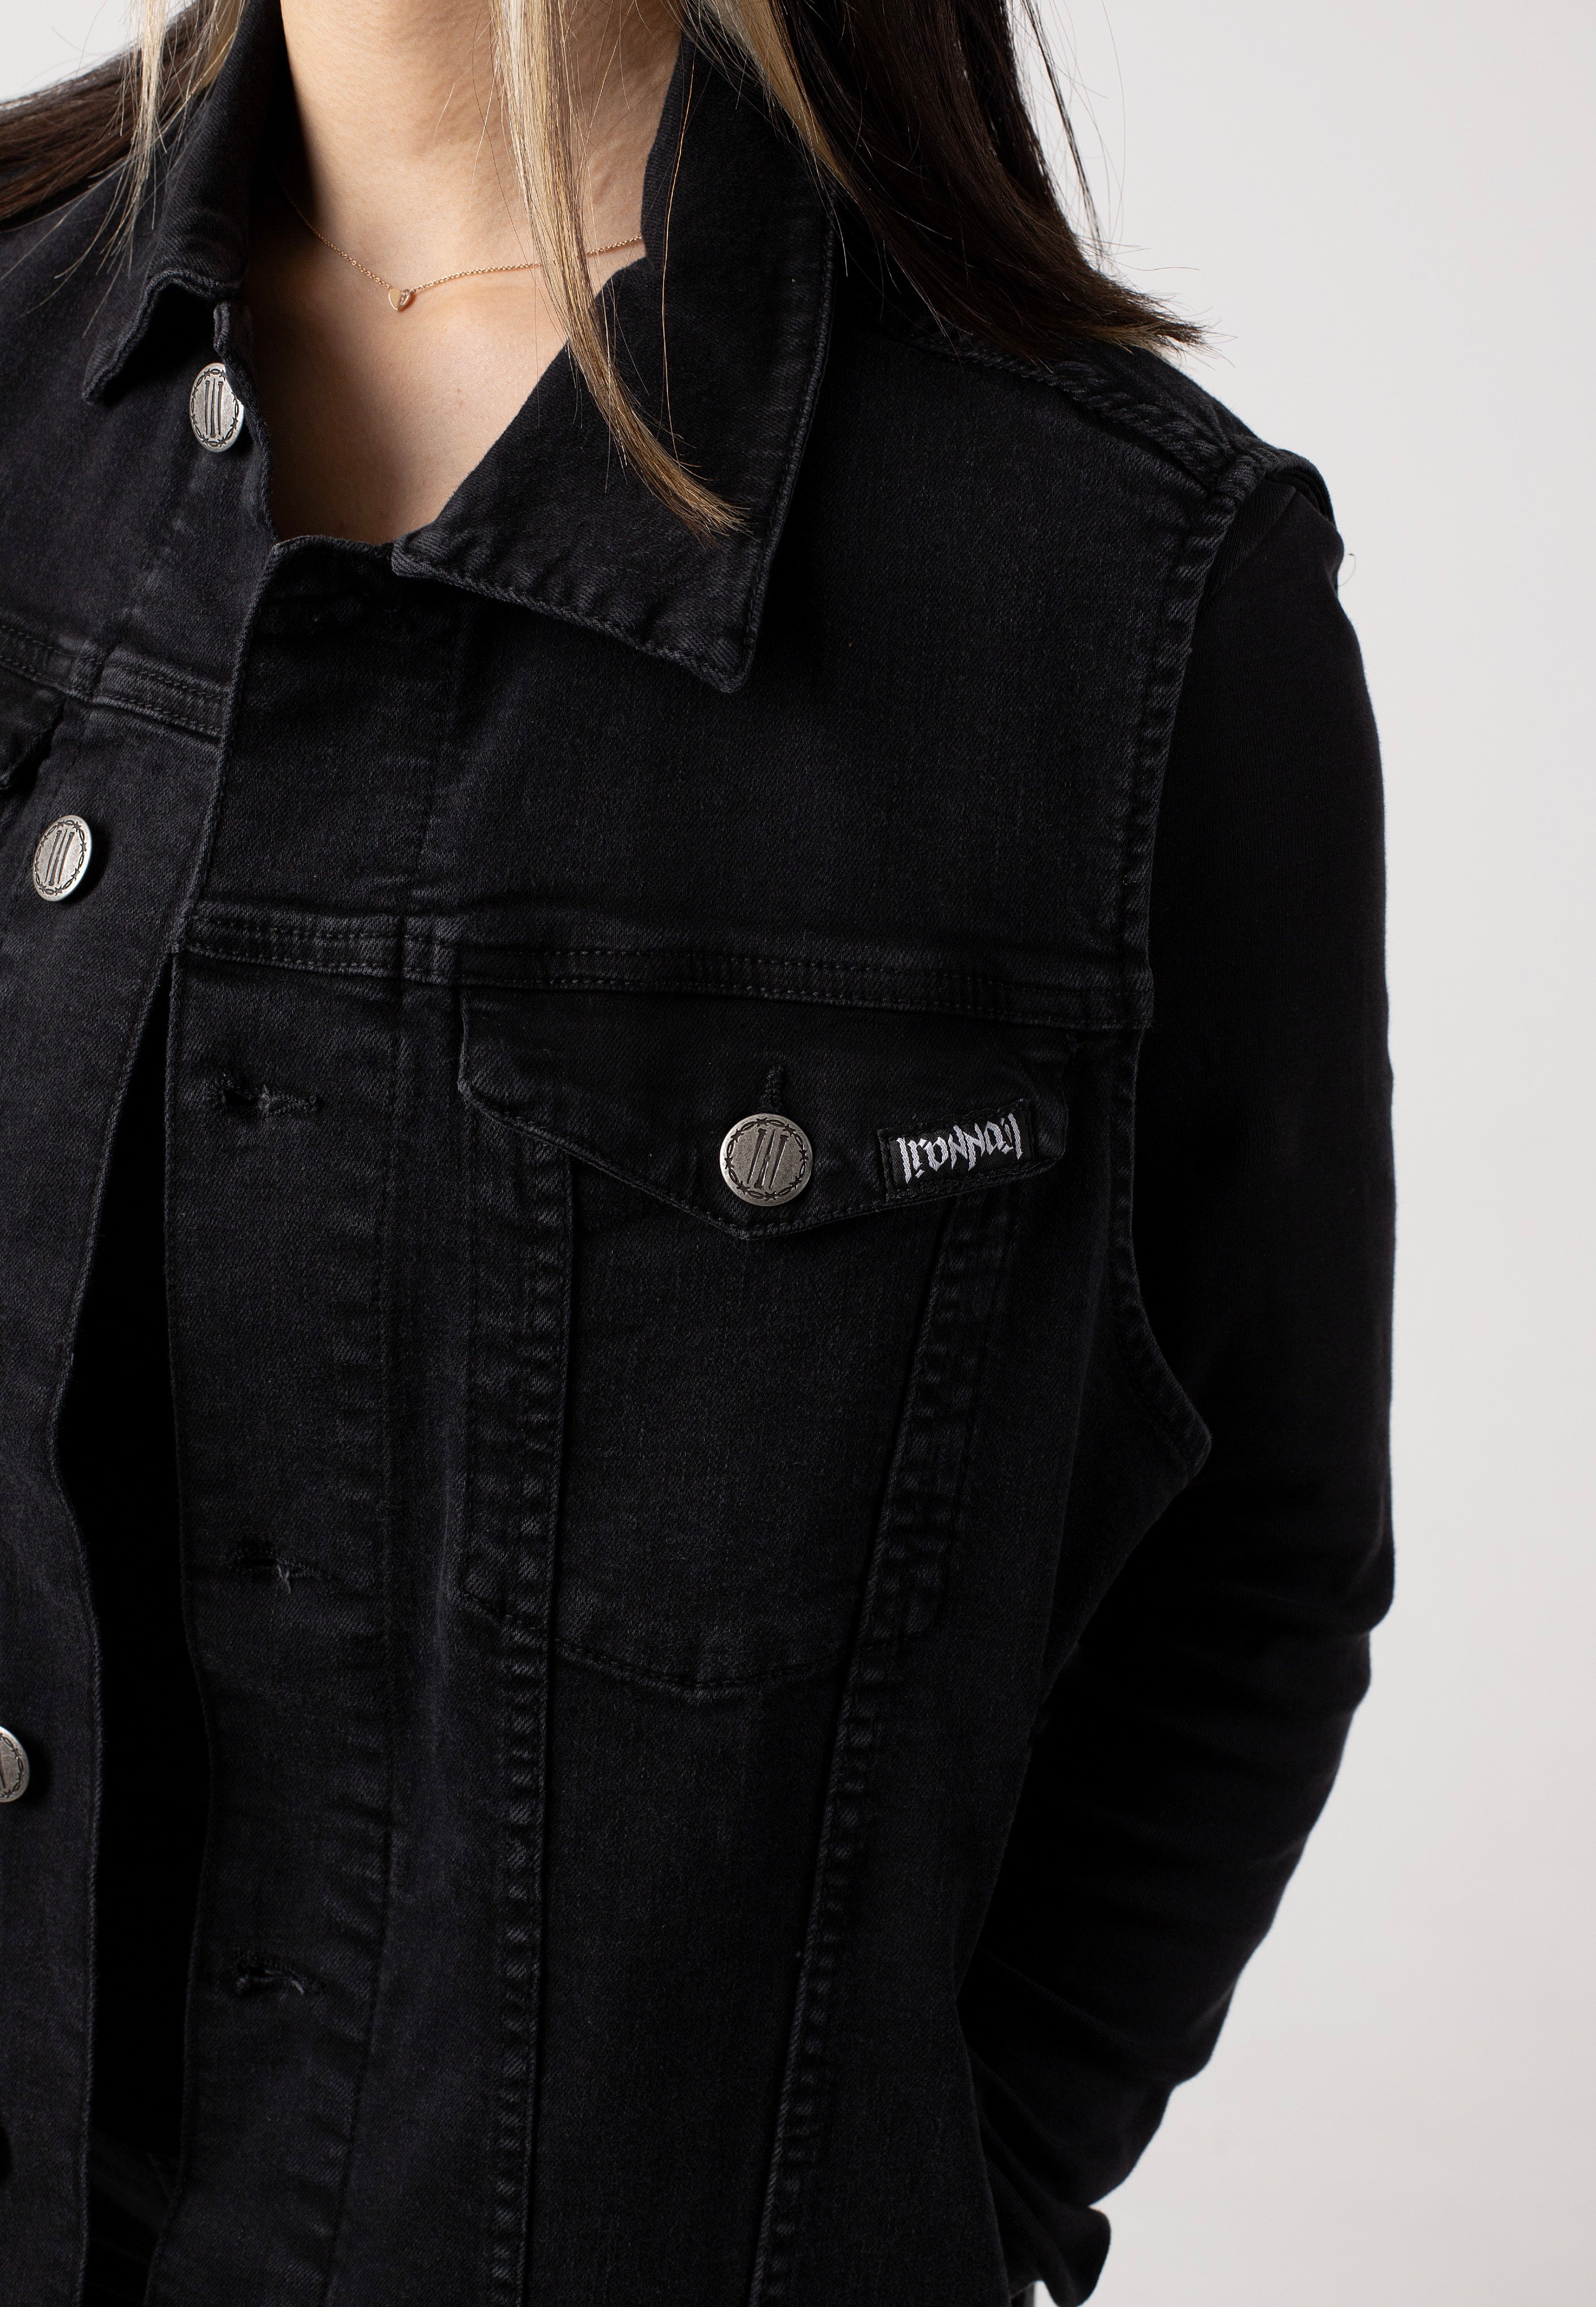 Ironnail - Neil Denim Black - Jeans Vest | Women-Image